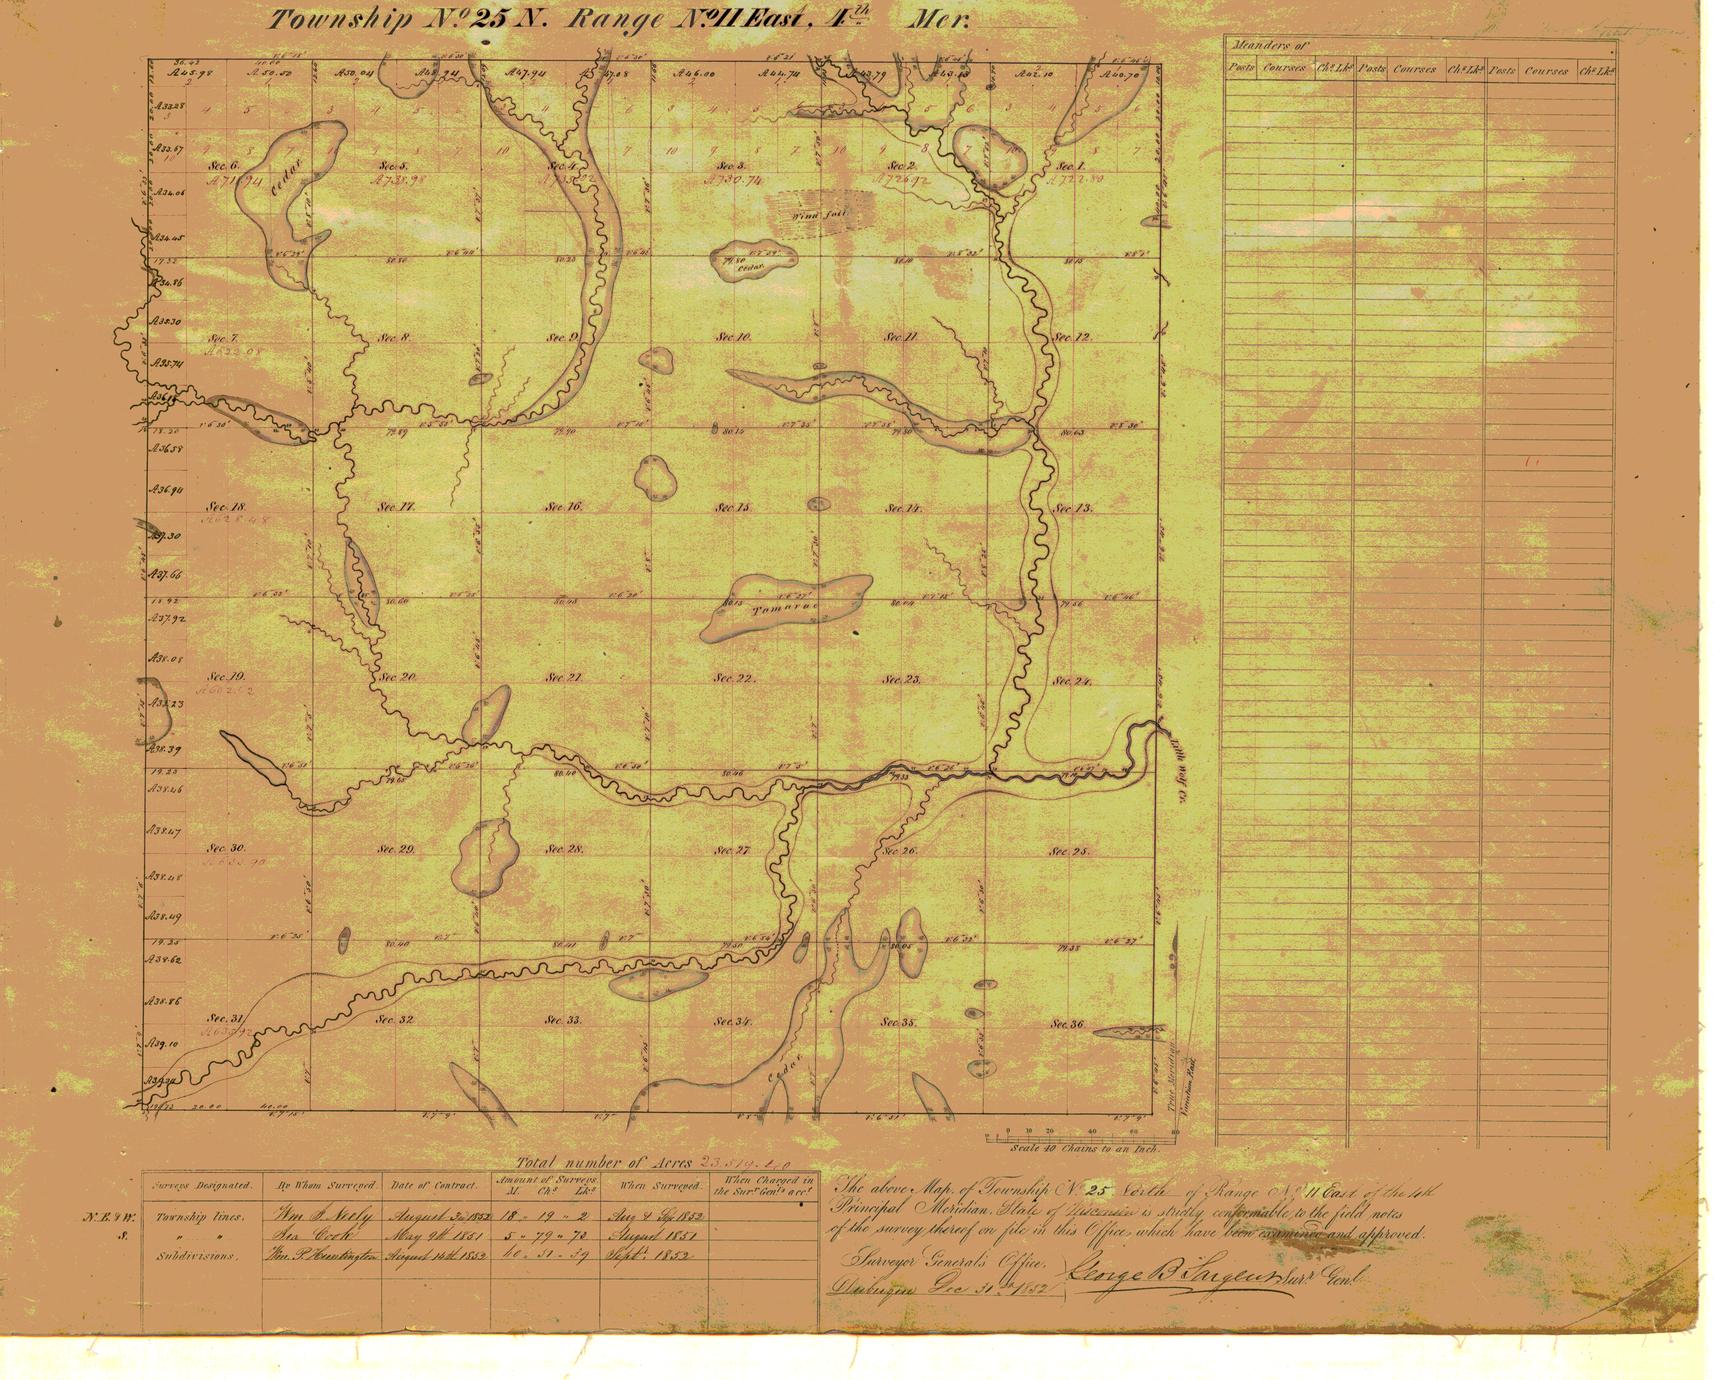 [Public Land Survey System map: Wisconsin Township 25 North, Range 11 East]